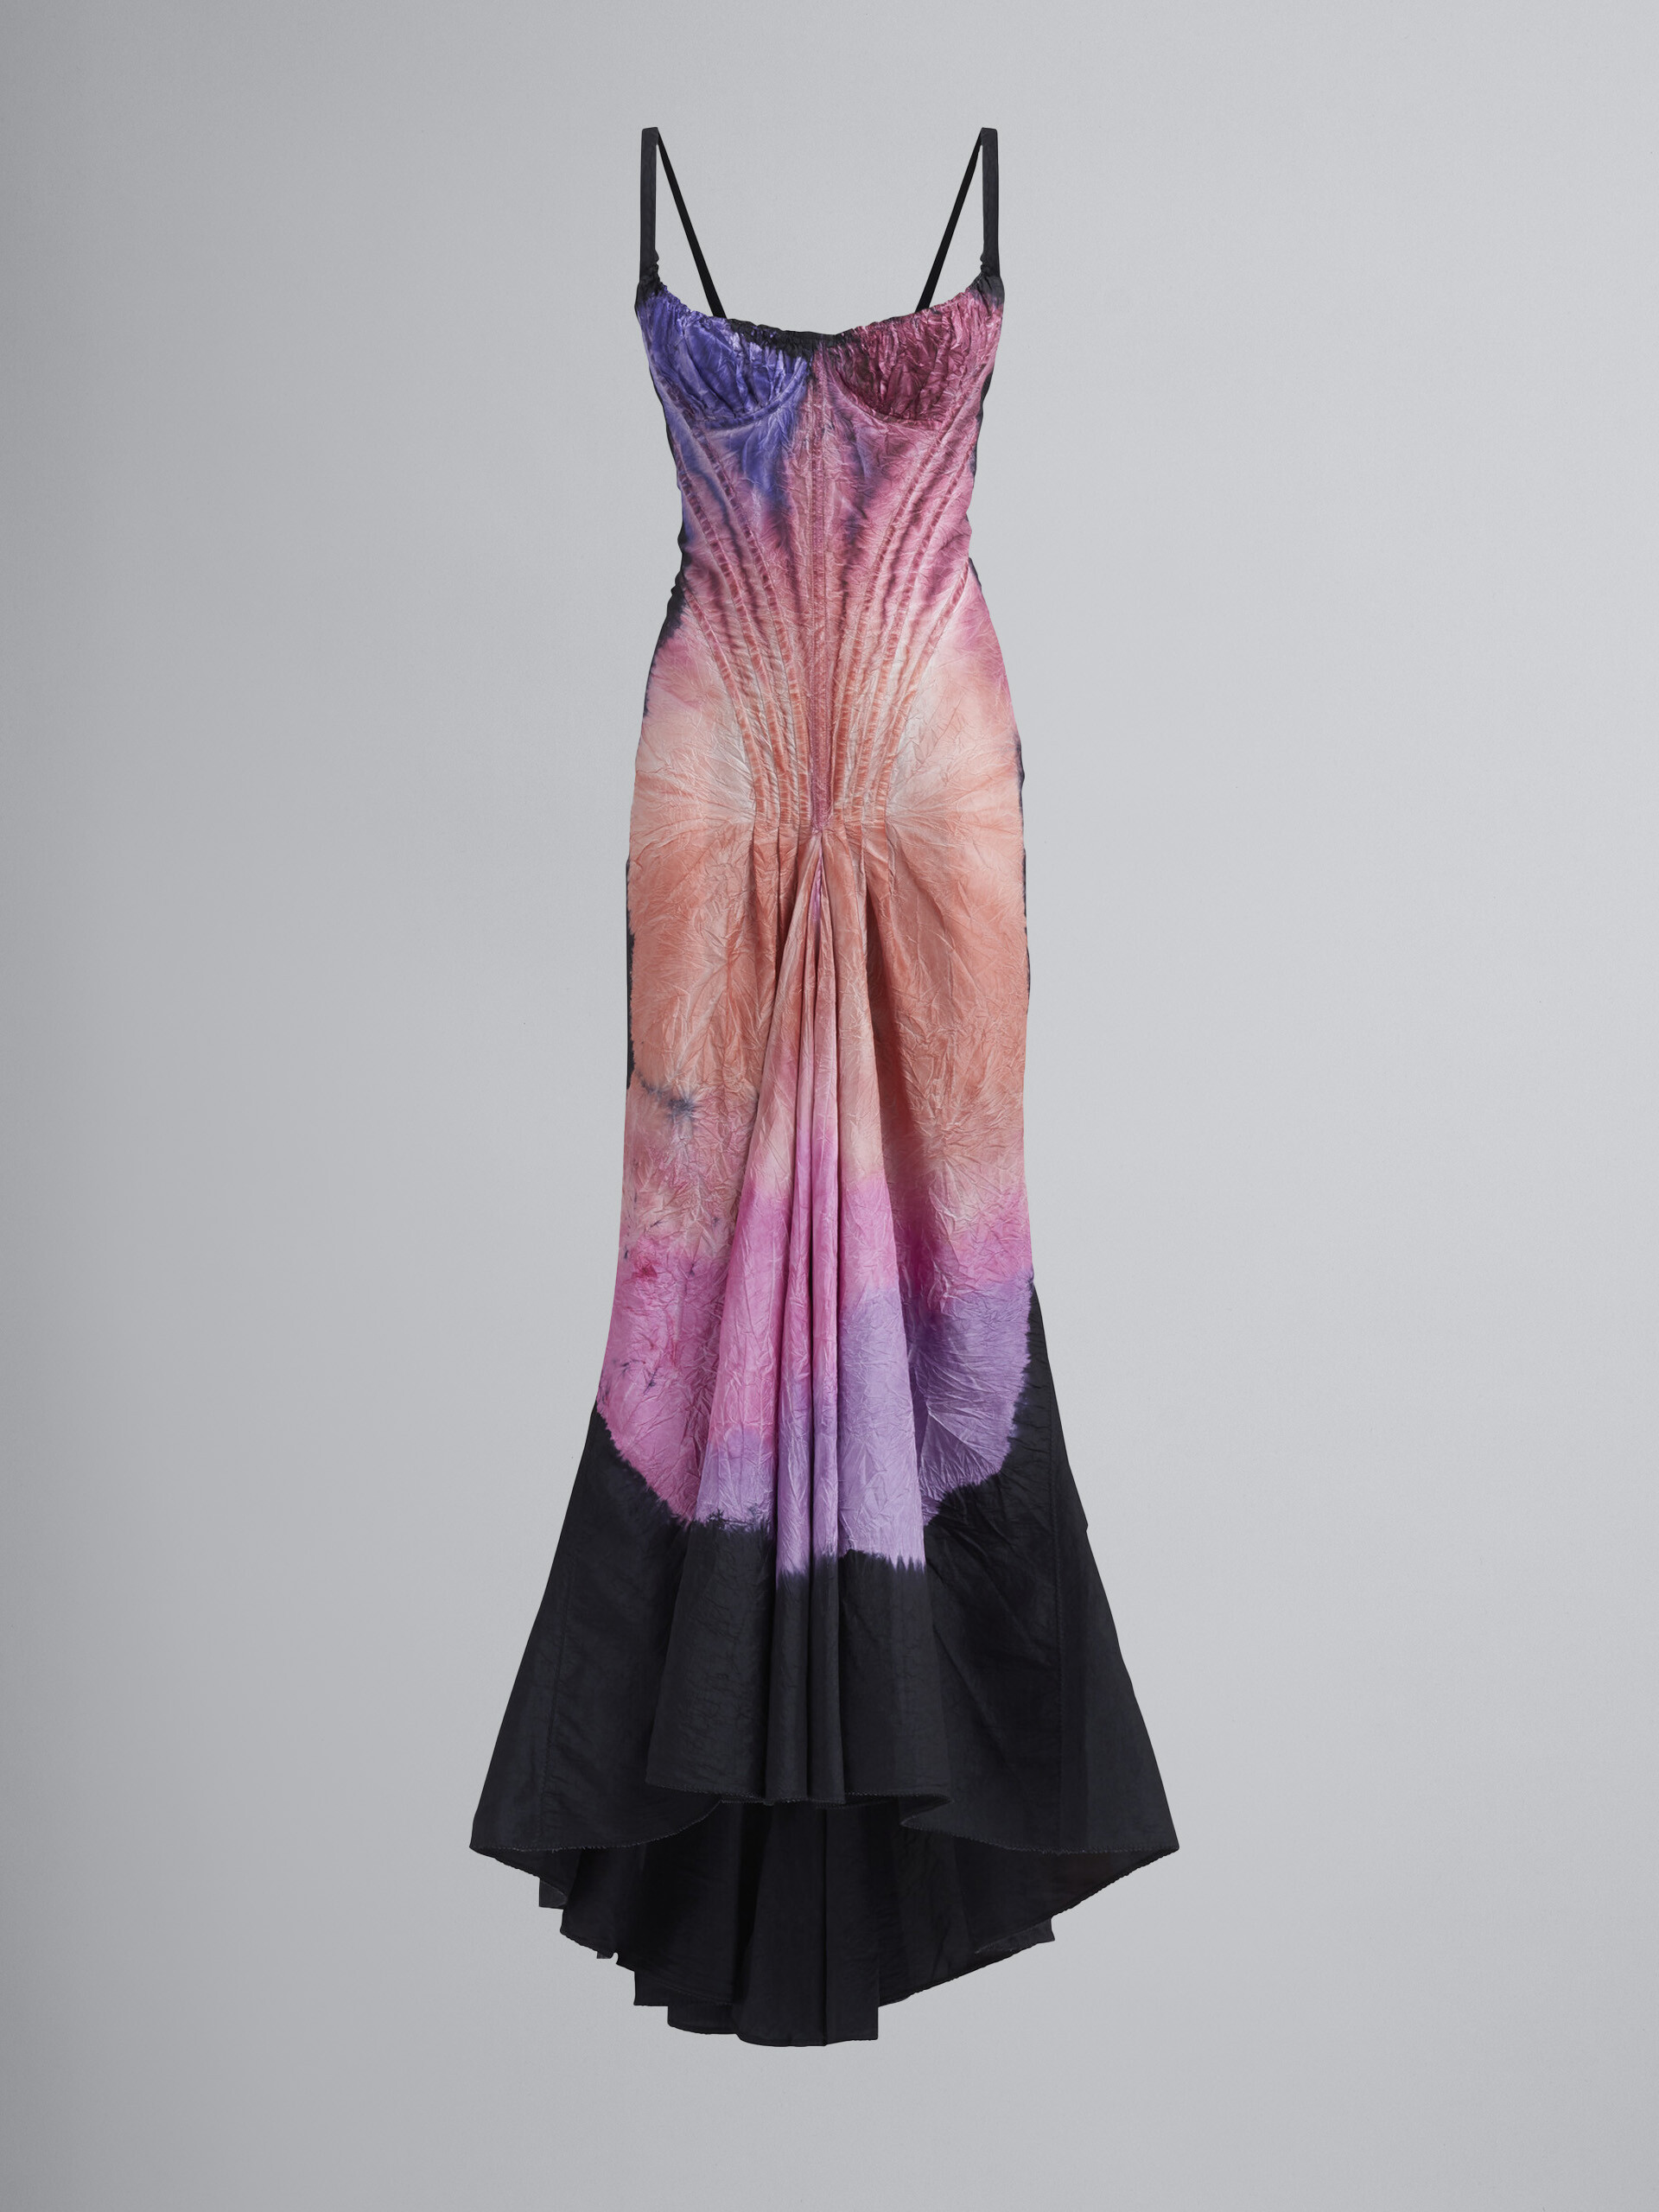 Vestido de tafetán de seda con teñido arco iris - Vestidos - Image 1